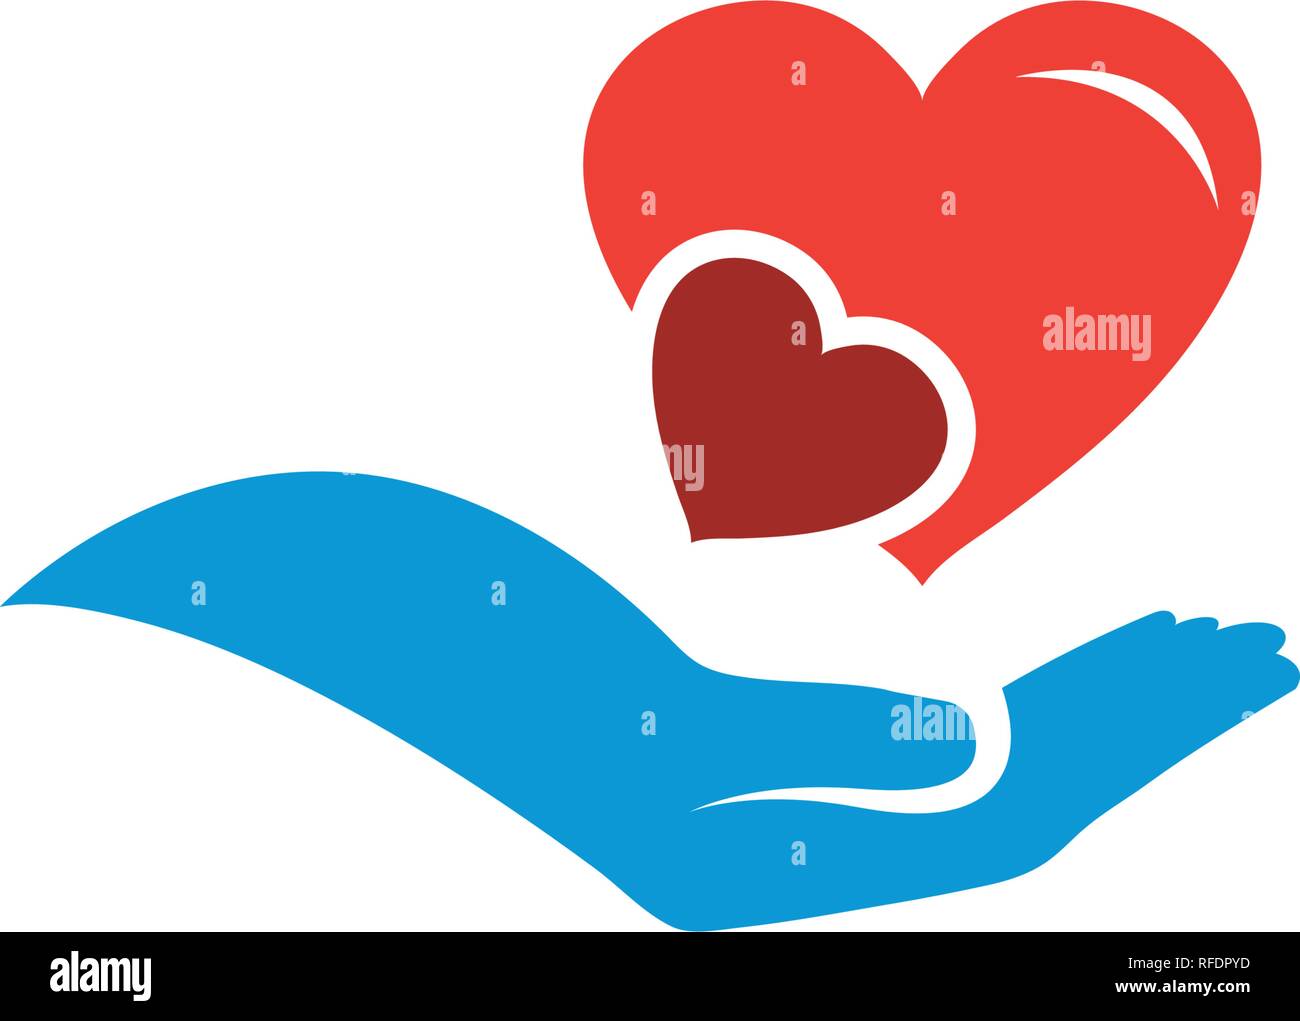 Illustration of charity logo design template vector Stock Vector